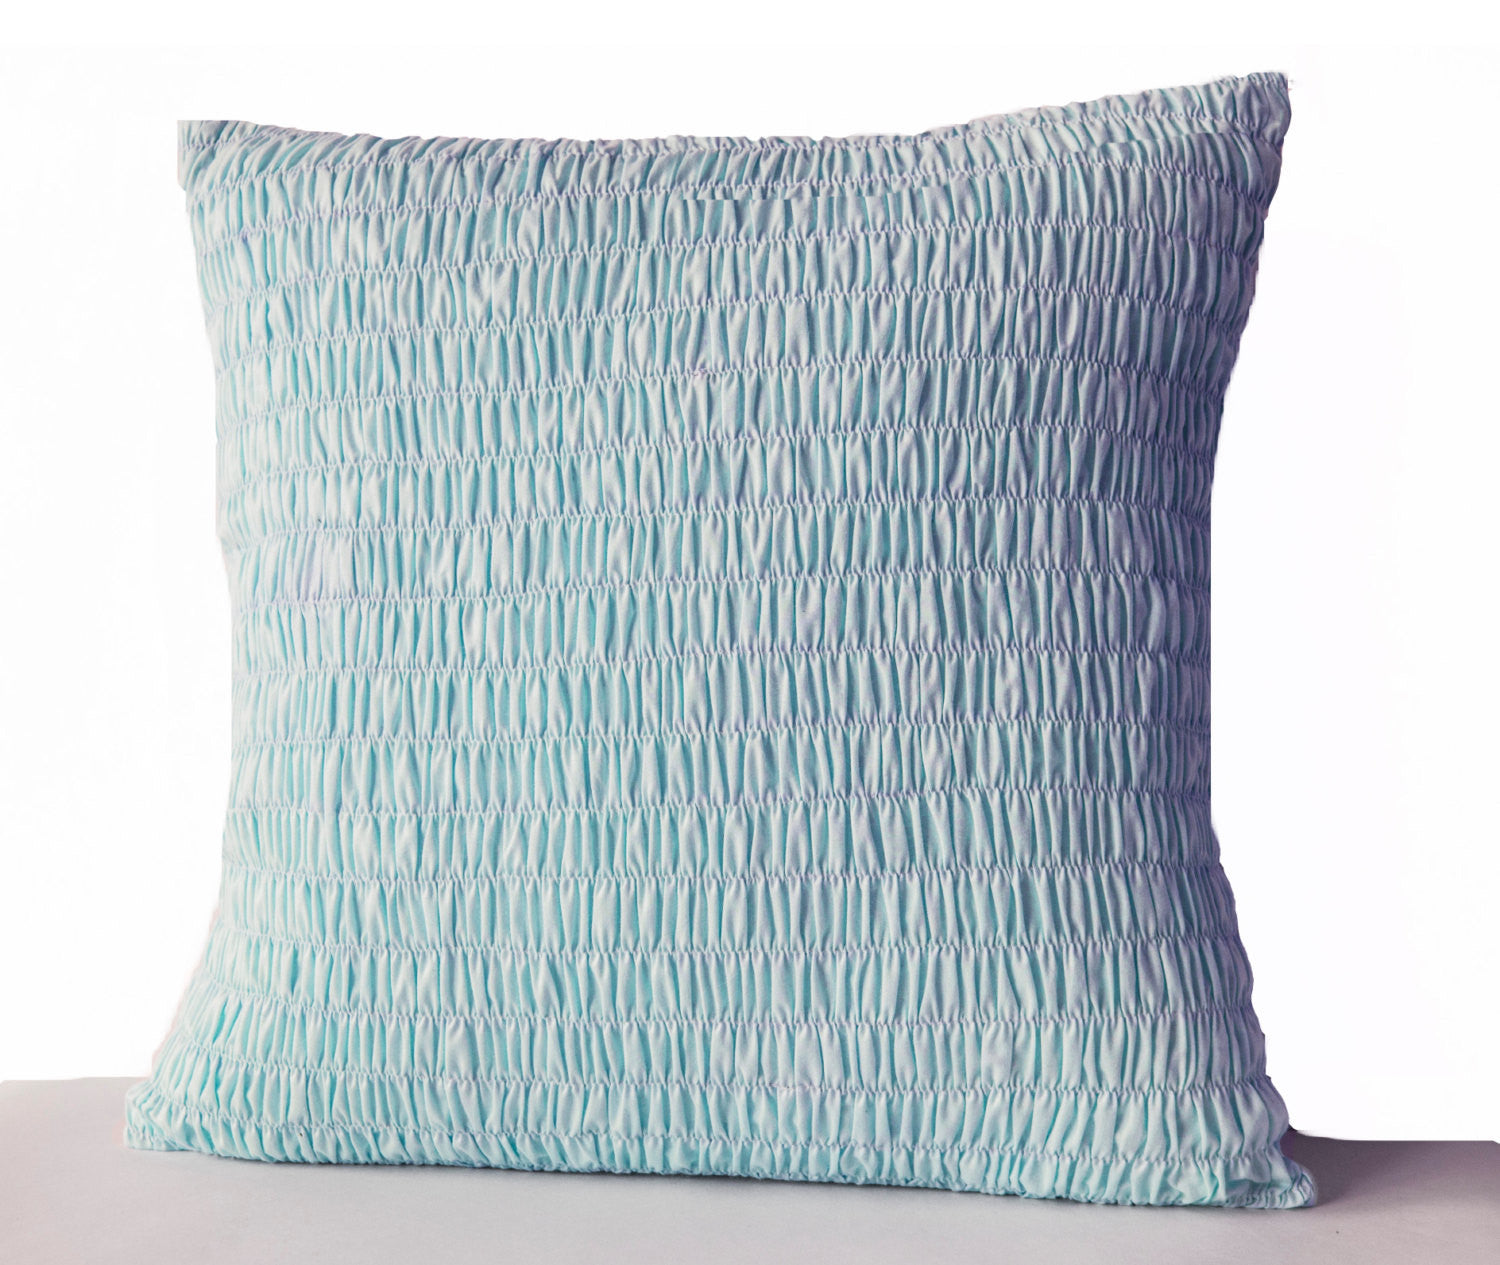 Handmade light blue cotton throw pillow with pleats